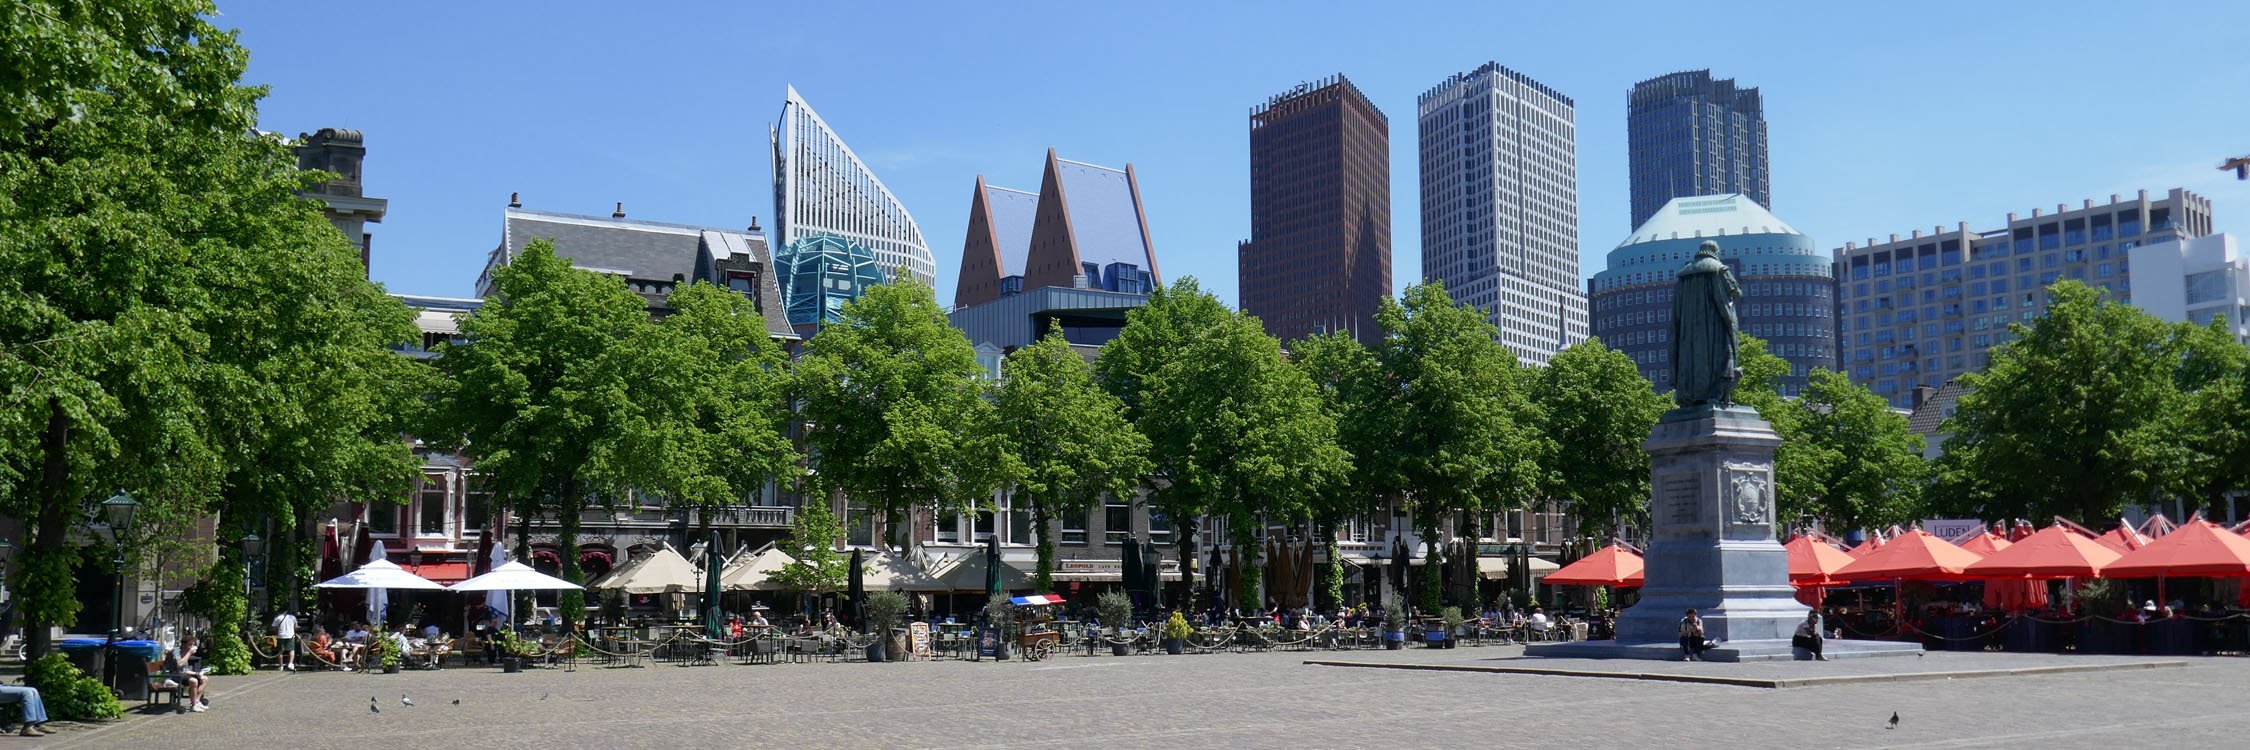 Den Haag Skyline plein.jpg